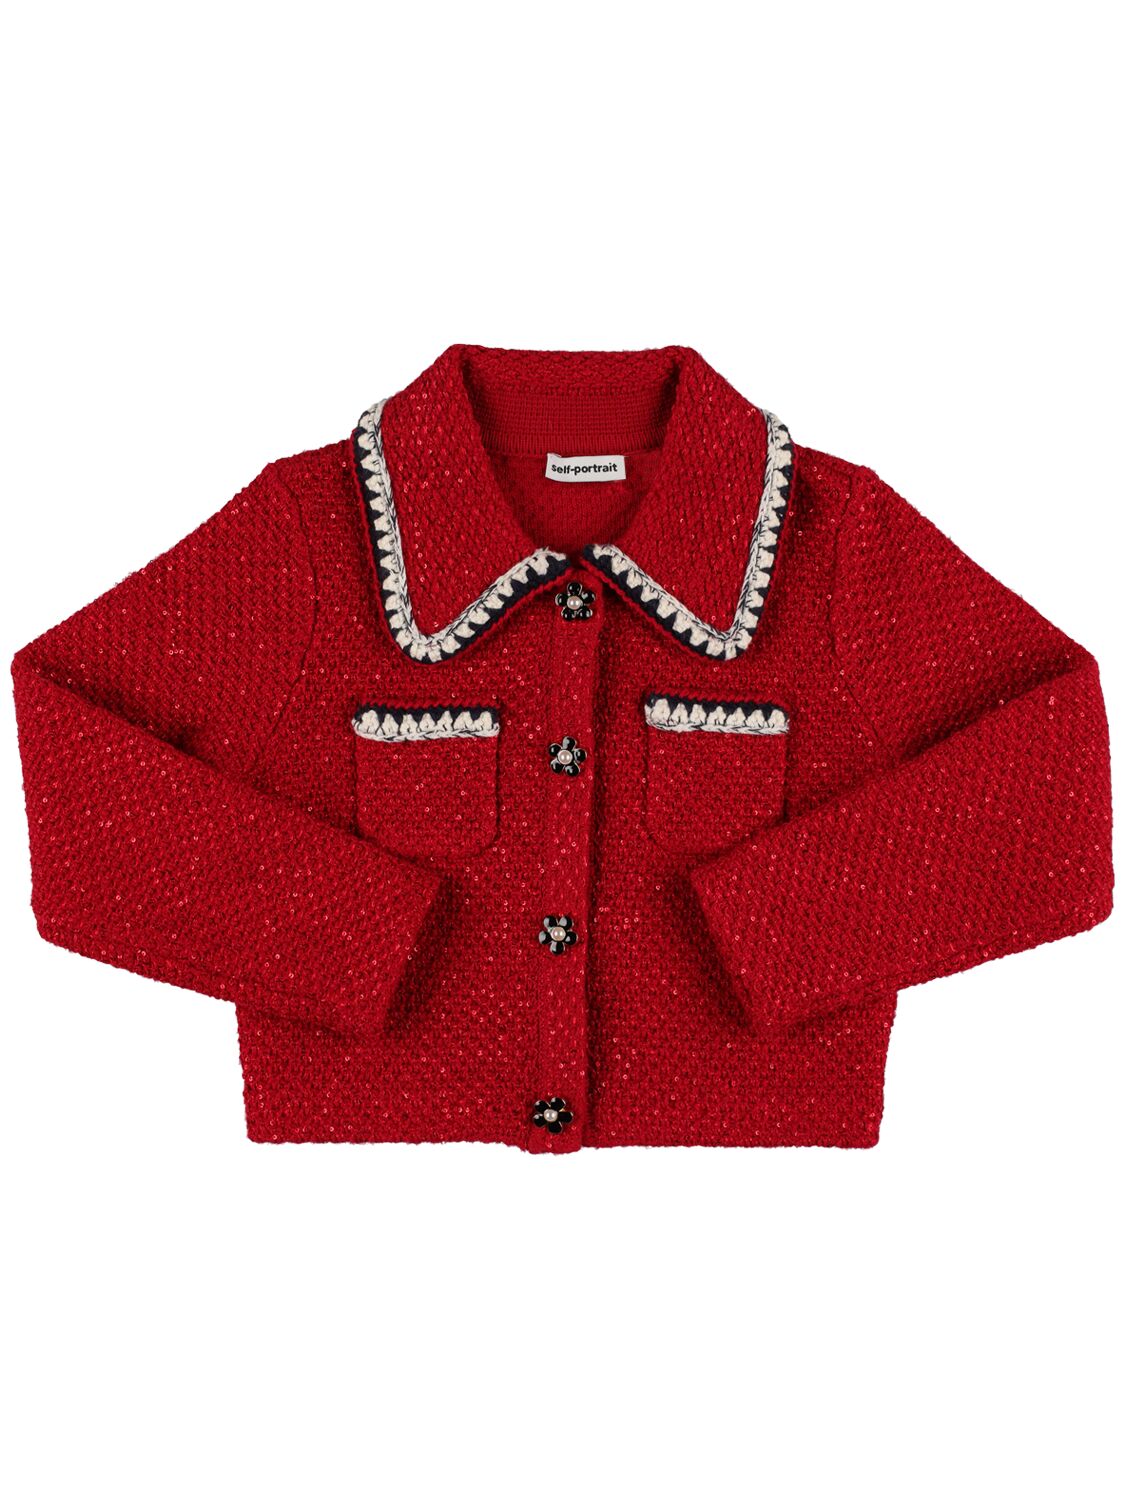 Self-portrait Kids' Glittered Cotton Knit Jacket In Red